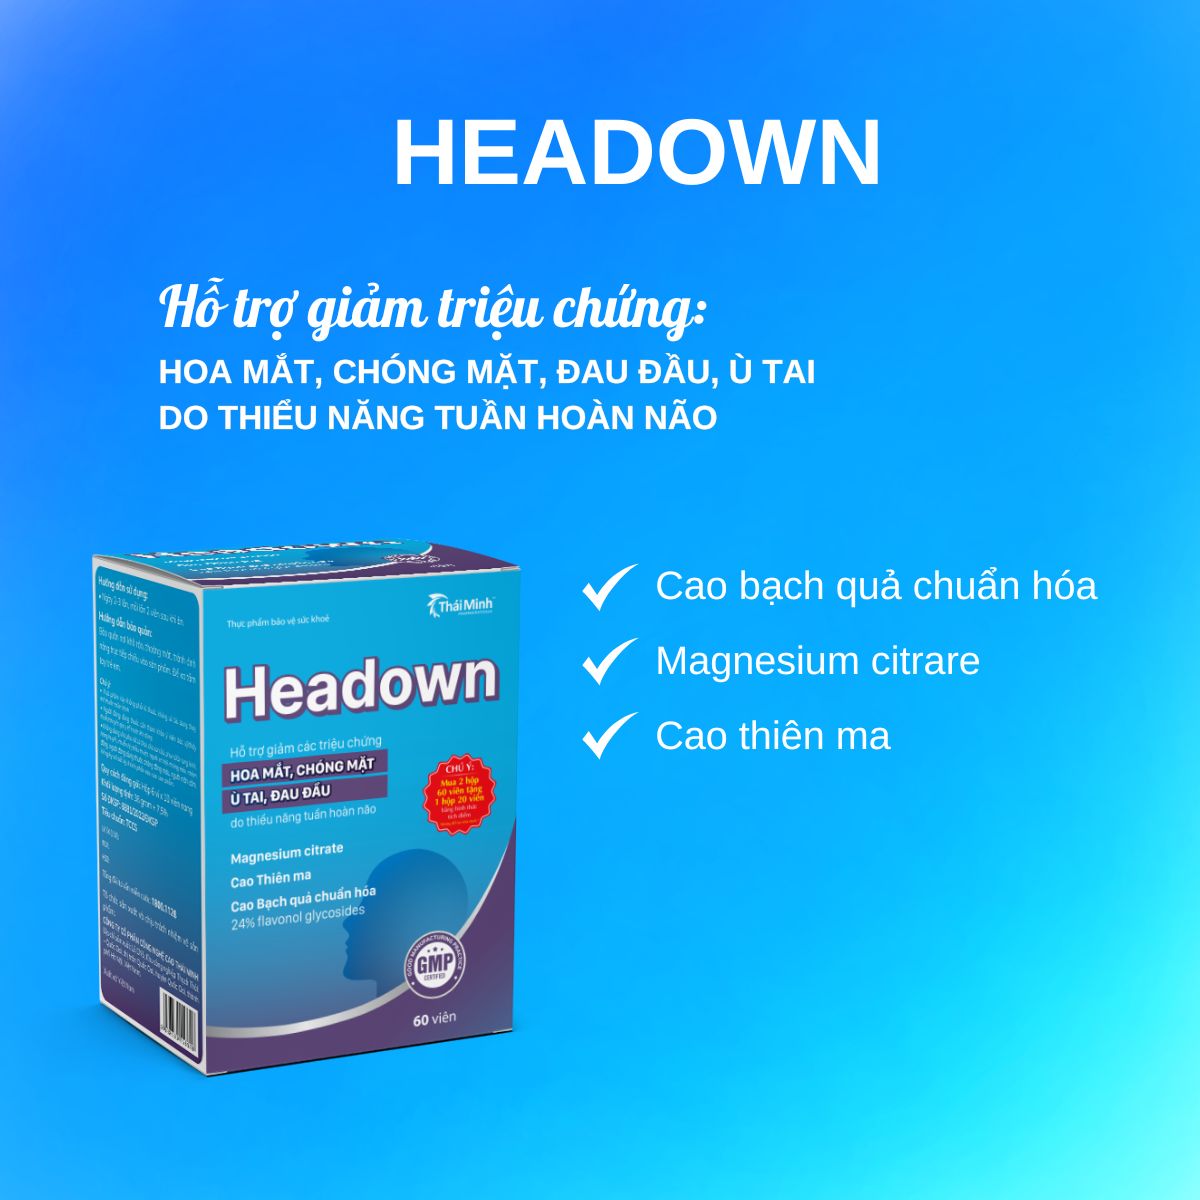 Headown